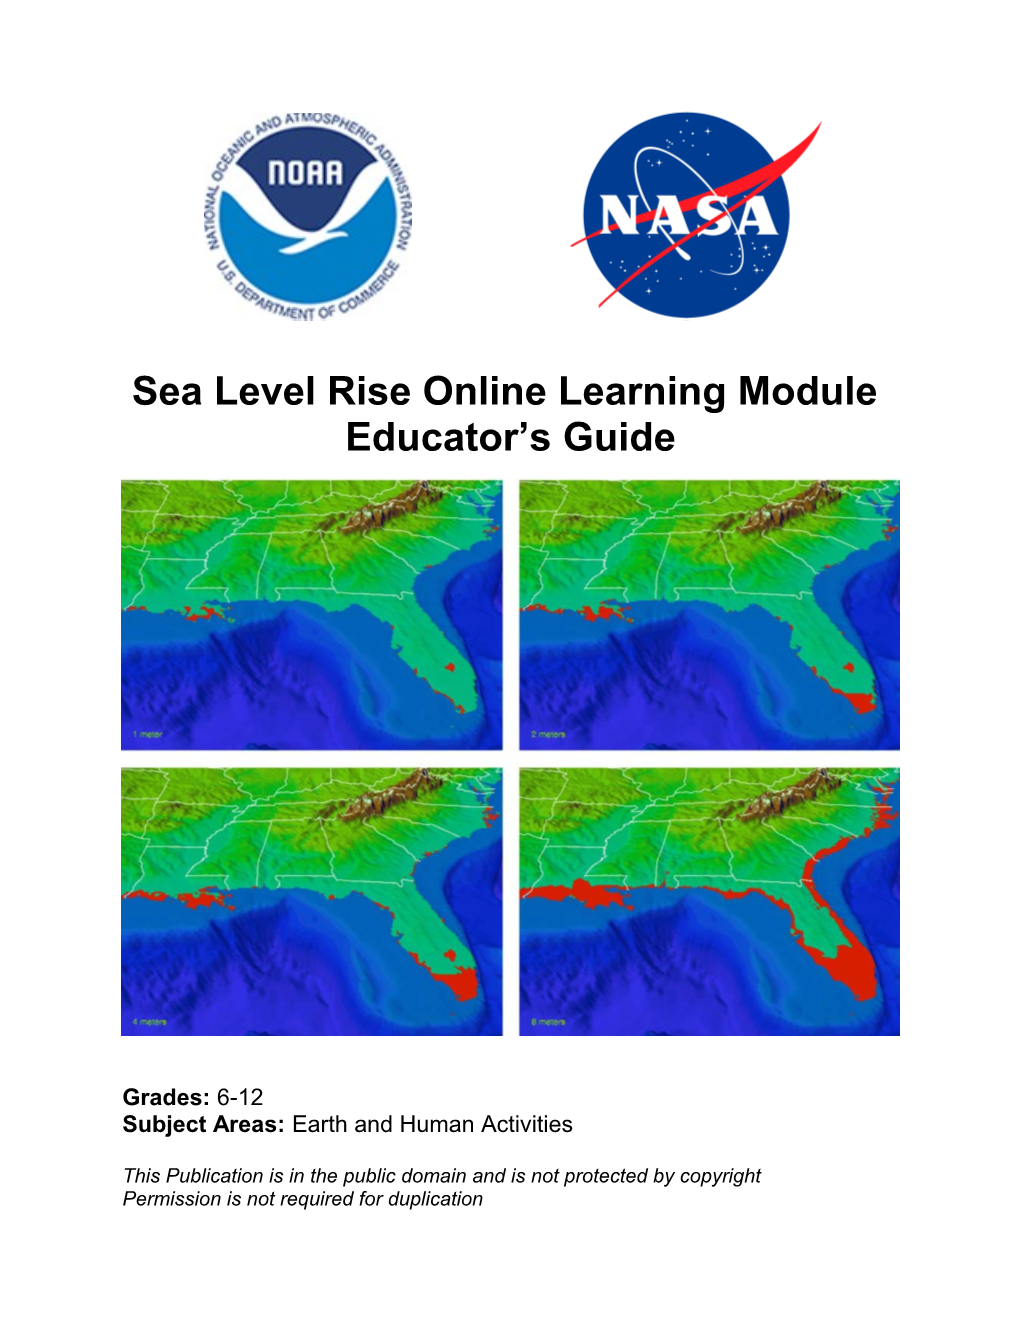 Sea Level Riseonline Learning Module